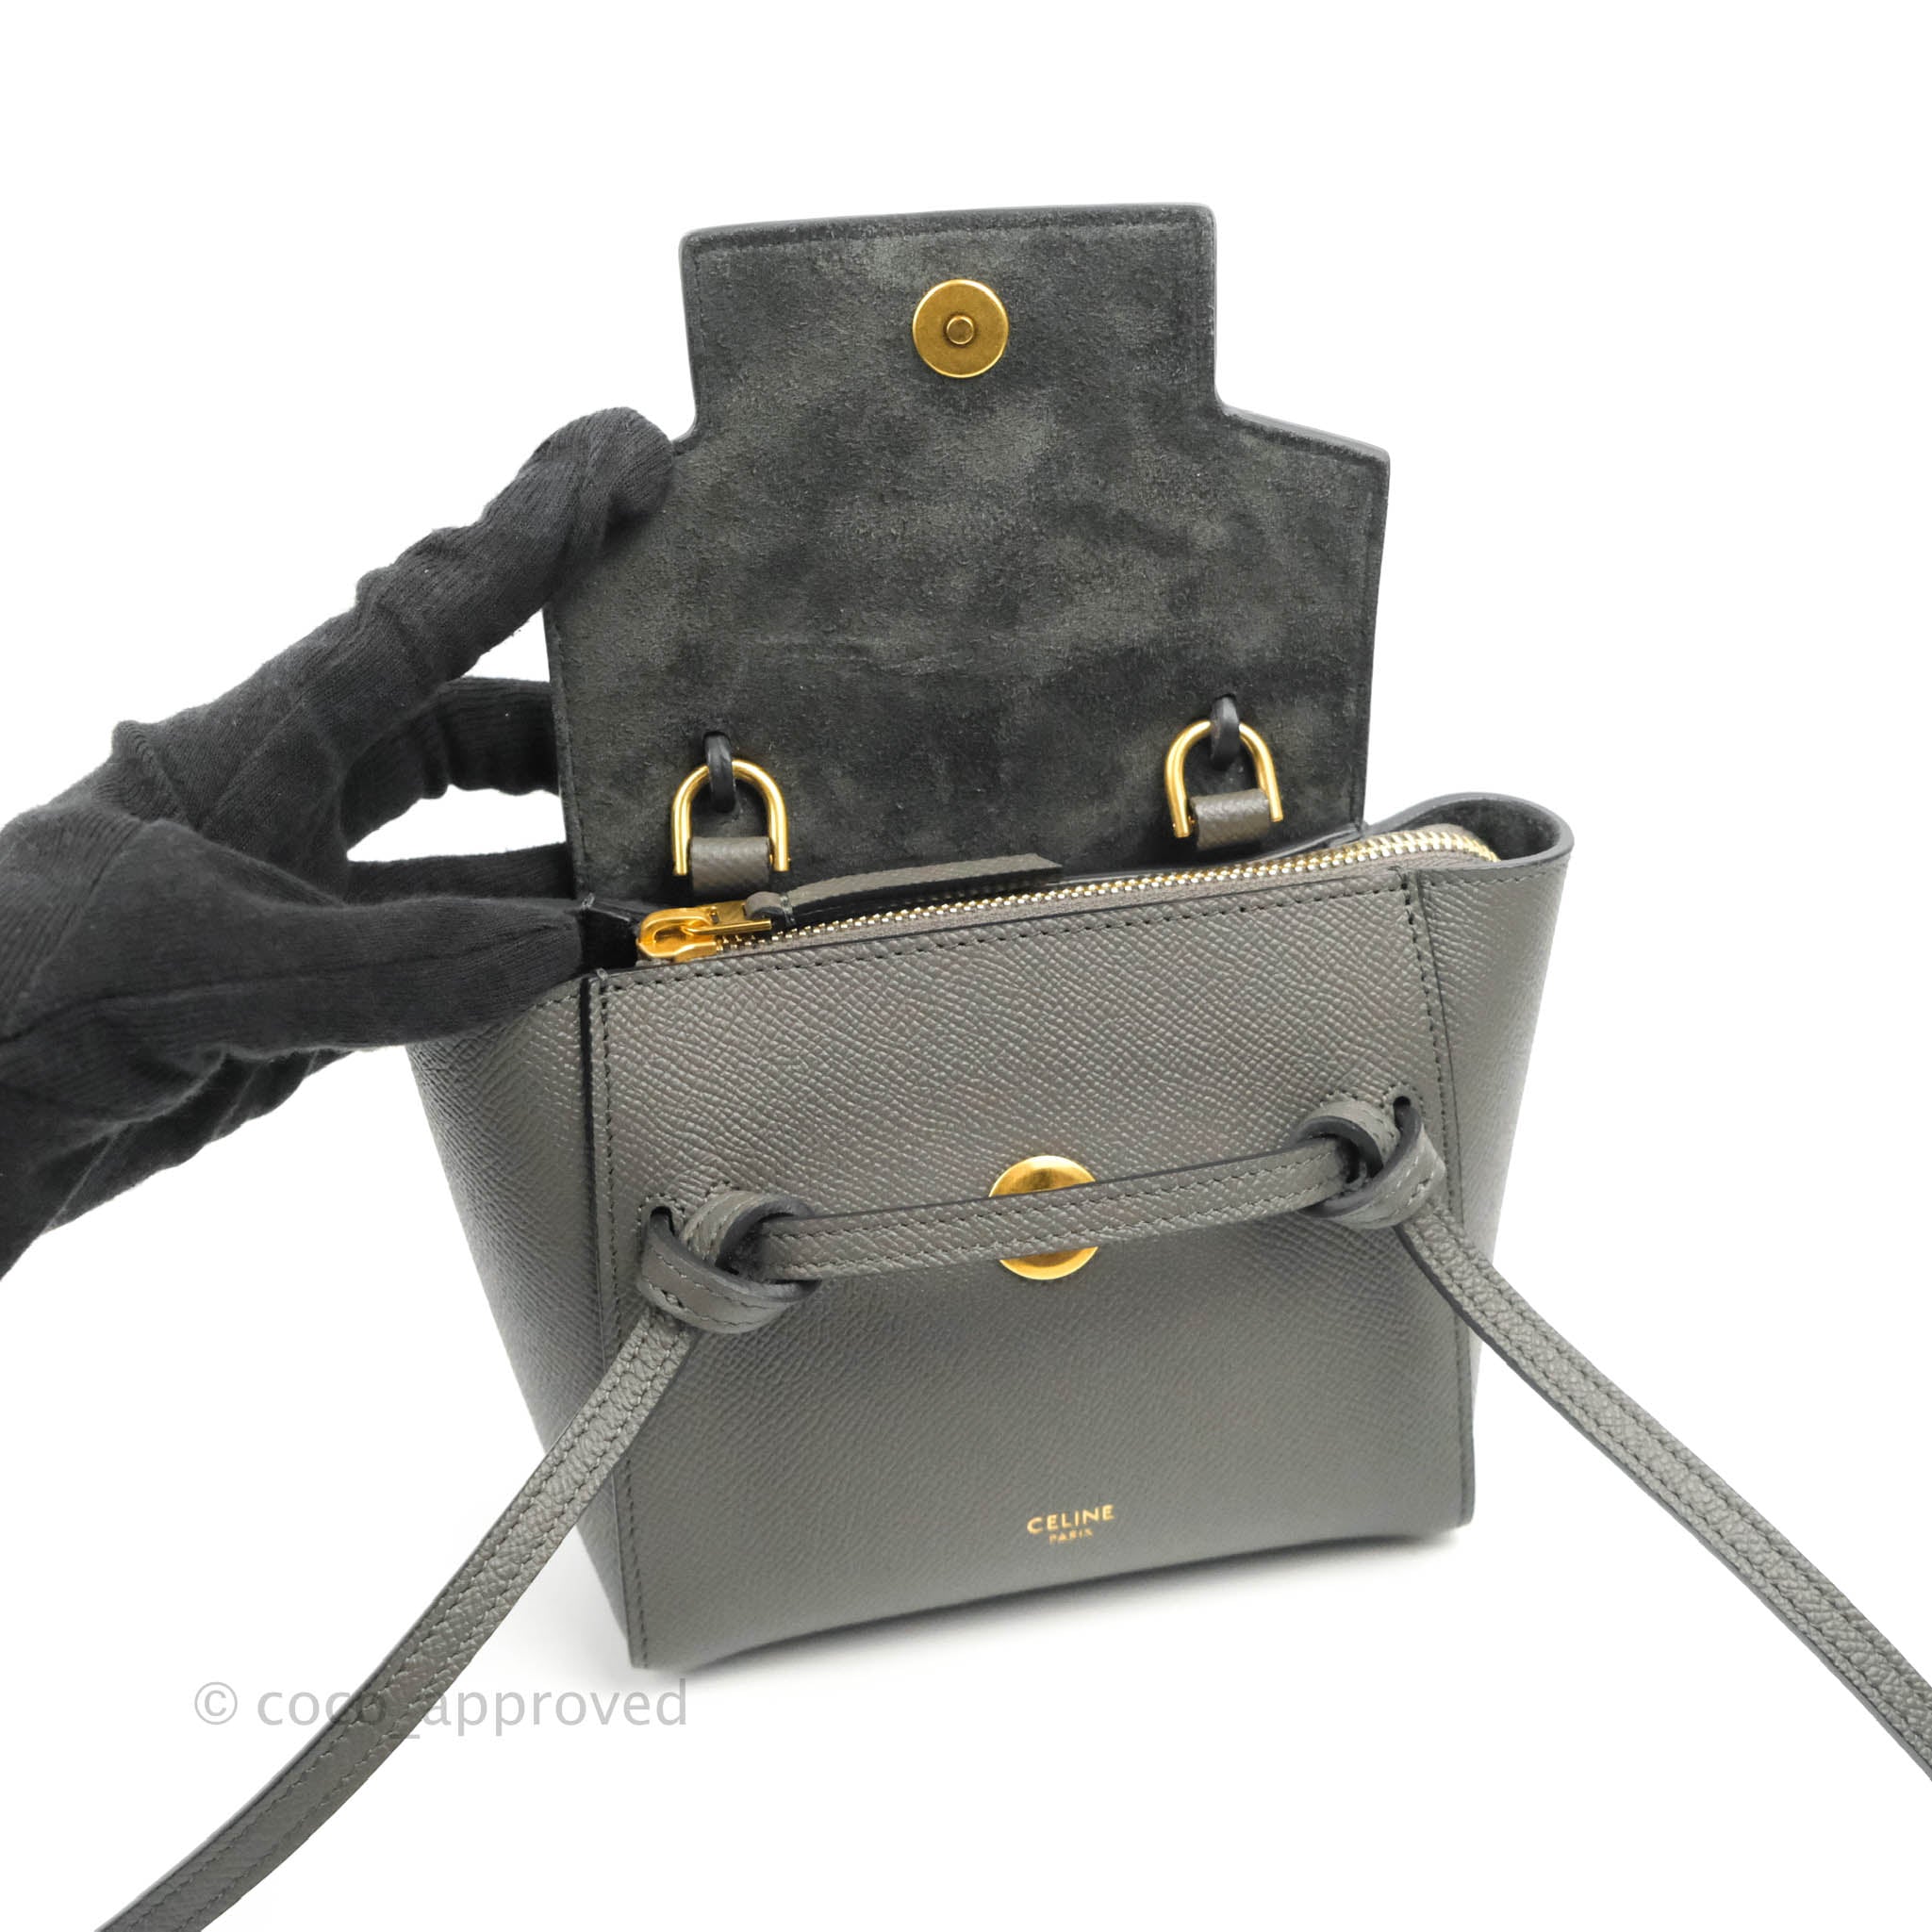 Celine Pico Belt Bag : r/handbags